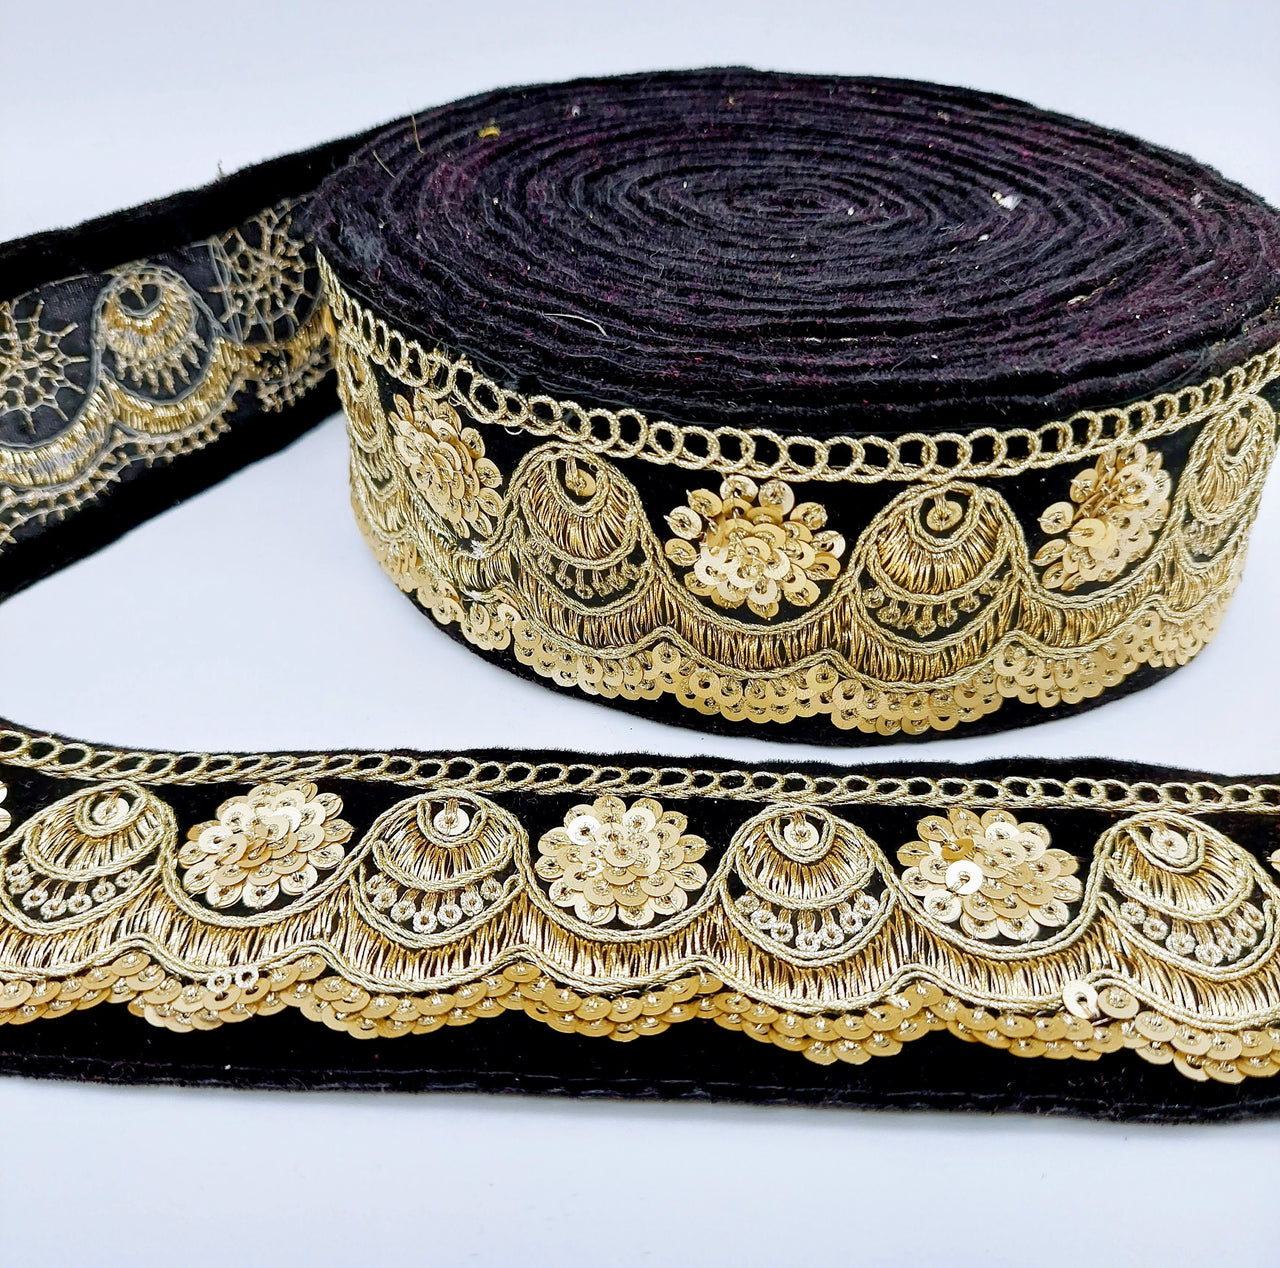 9 Yards Embroidered Velvet Fabric Trim Sequins Lace Sewing Trimming Sari Trim Indian Border